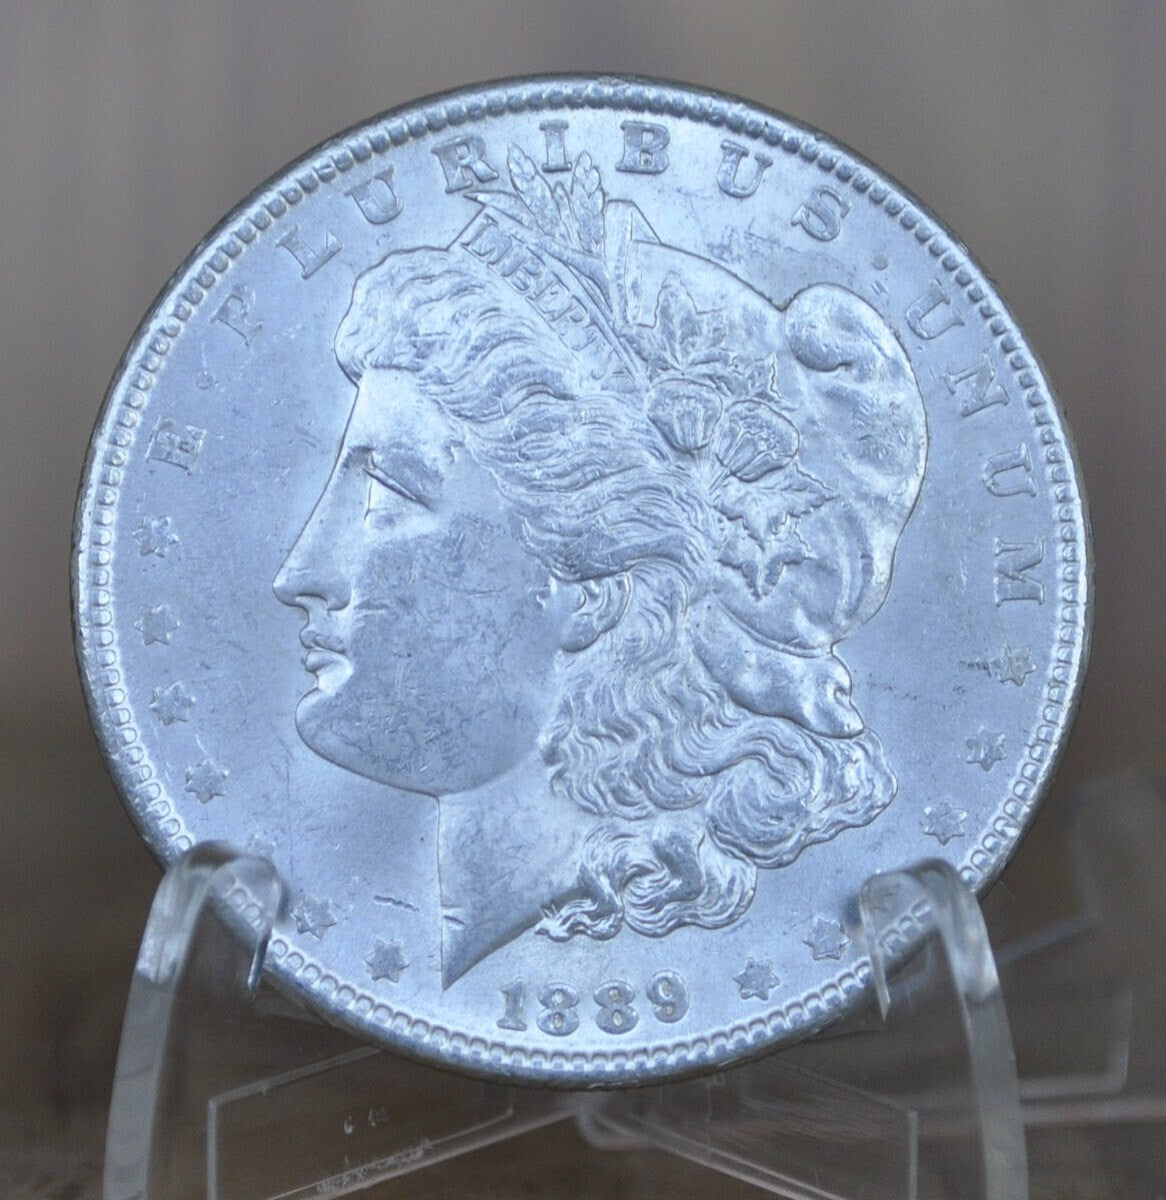 1889-O Morgan Silver Dollar - Choose by Grade / Condition - 1889-O Morgan Dollar - 1889 Silver Dollar - O Mint Mark - Good Date